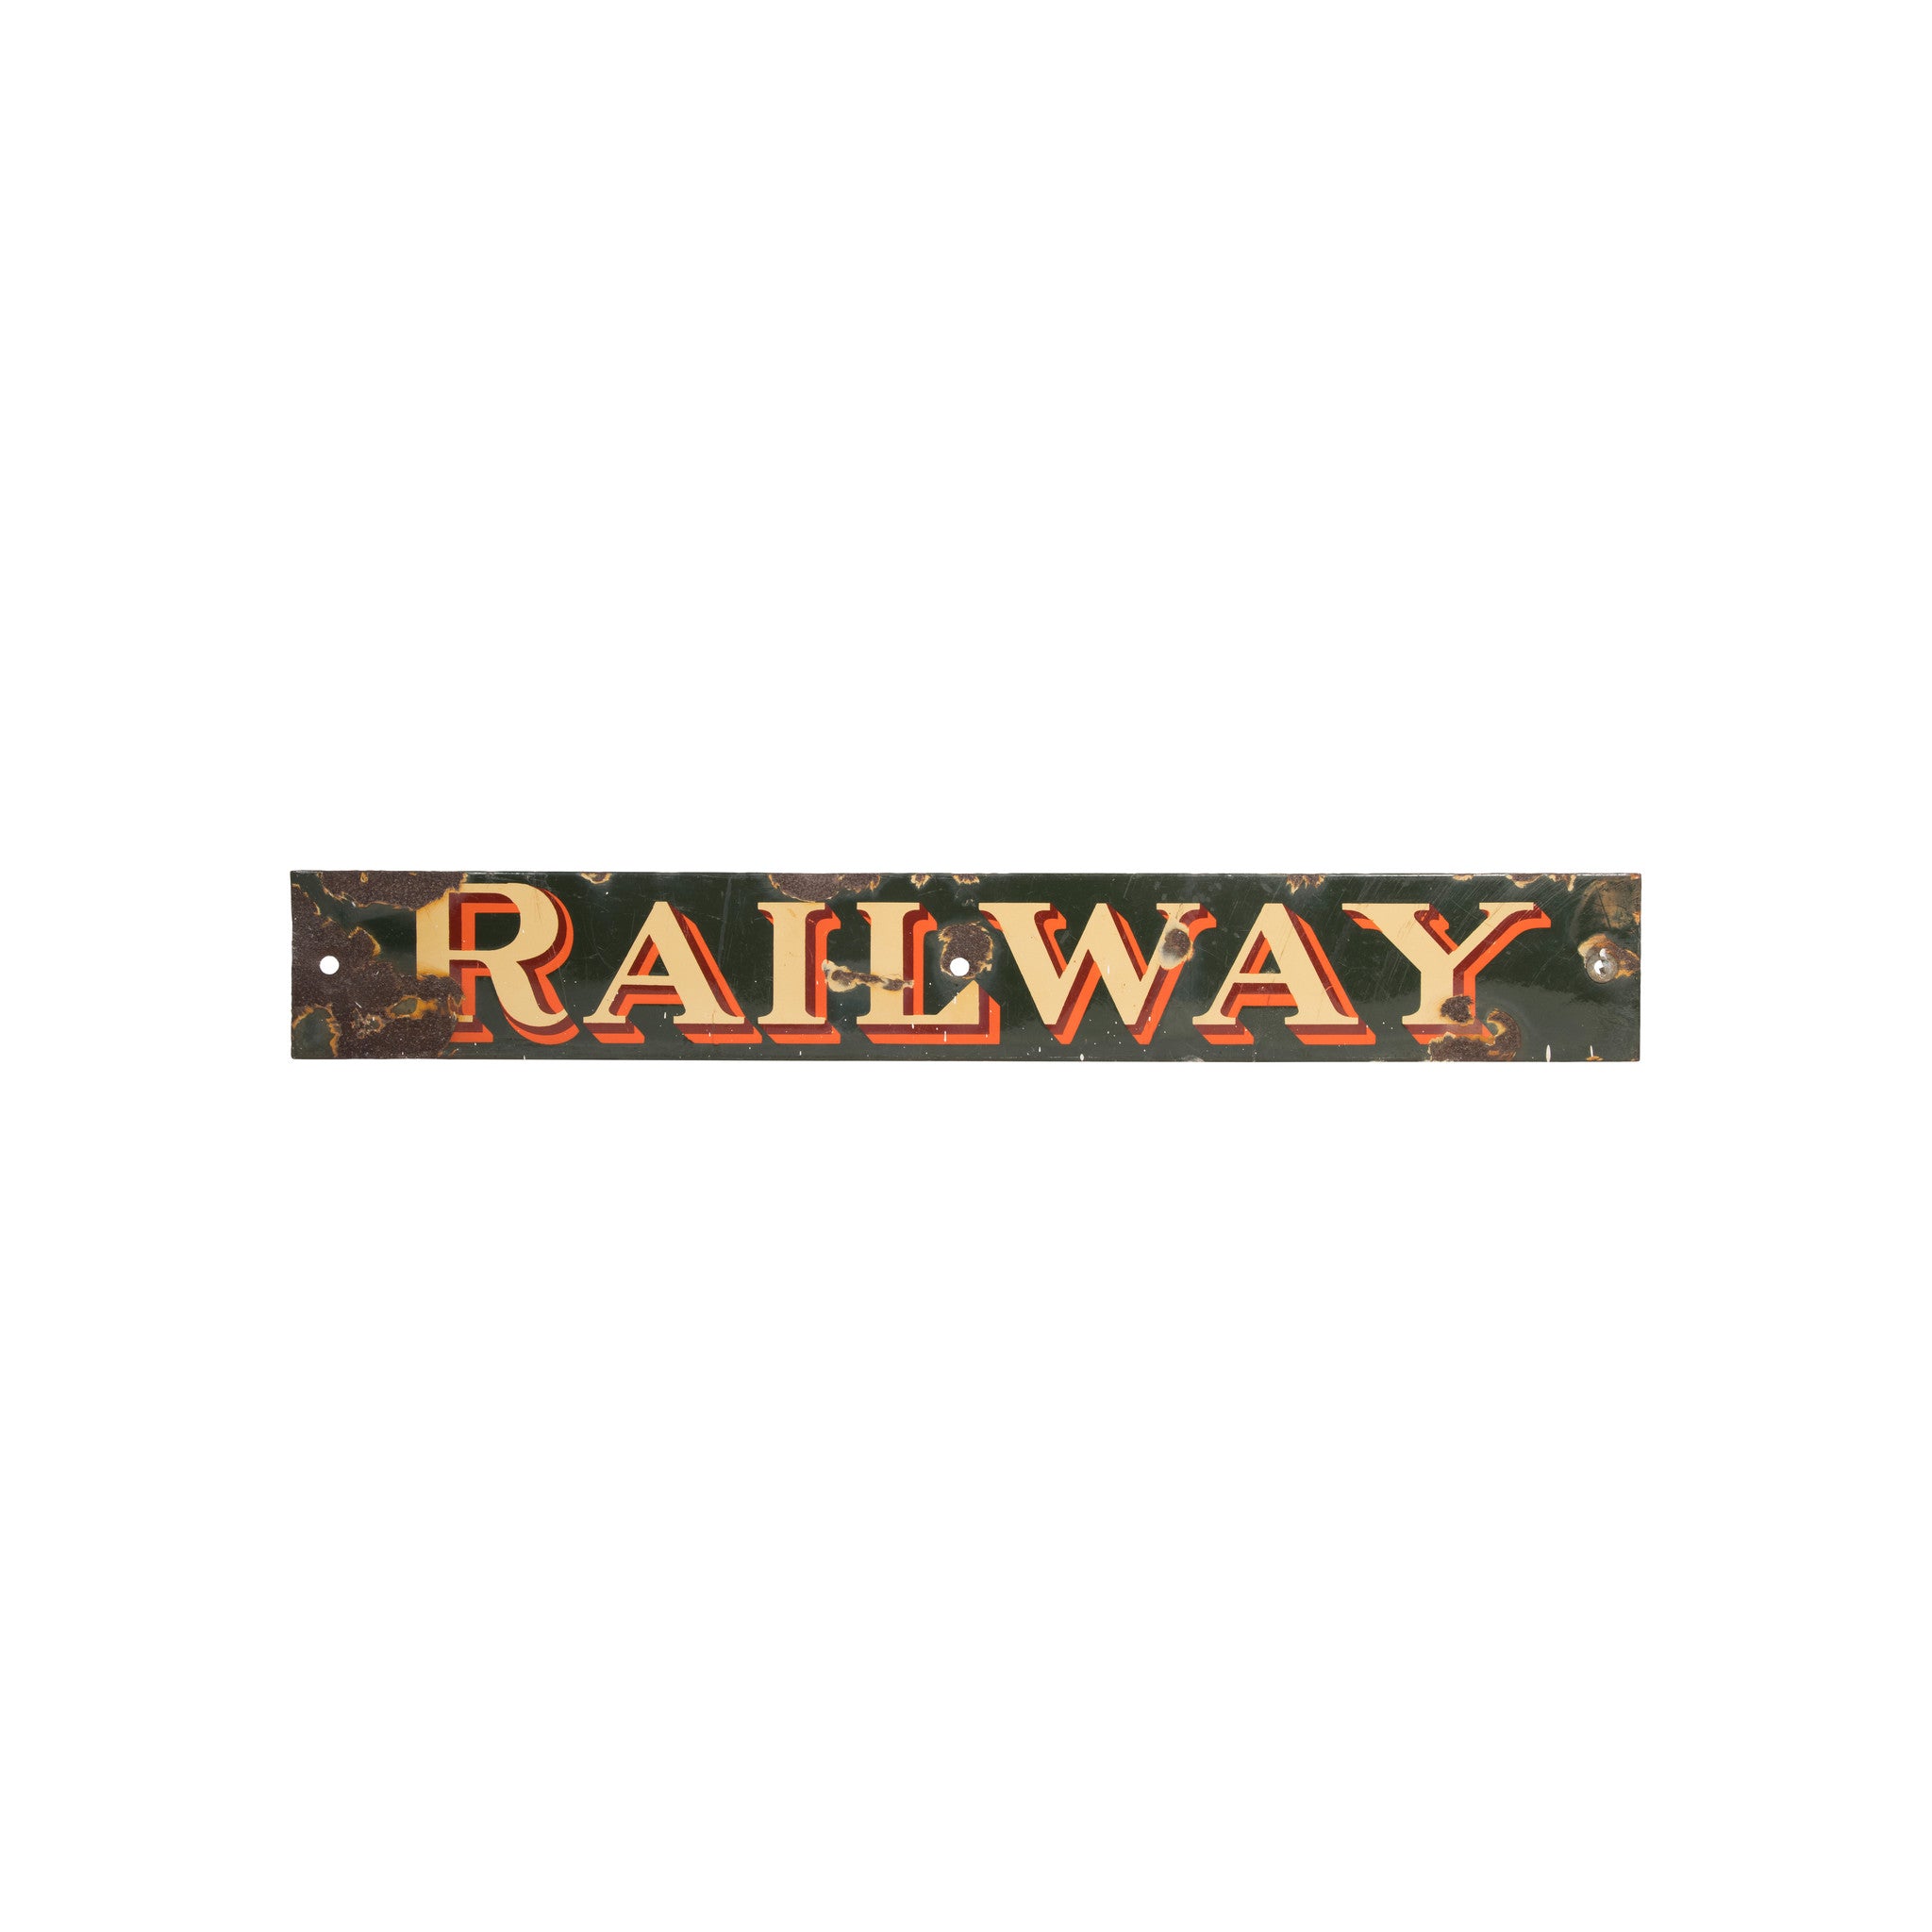 Railroad Express Depot Sign